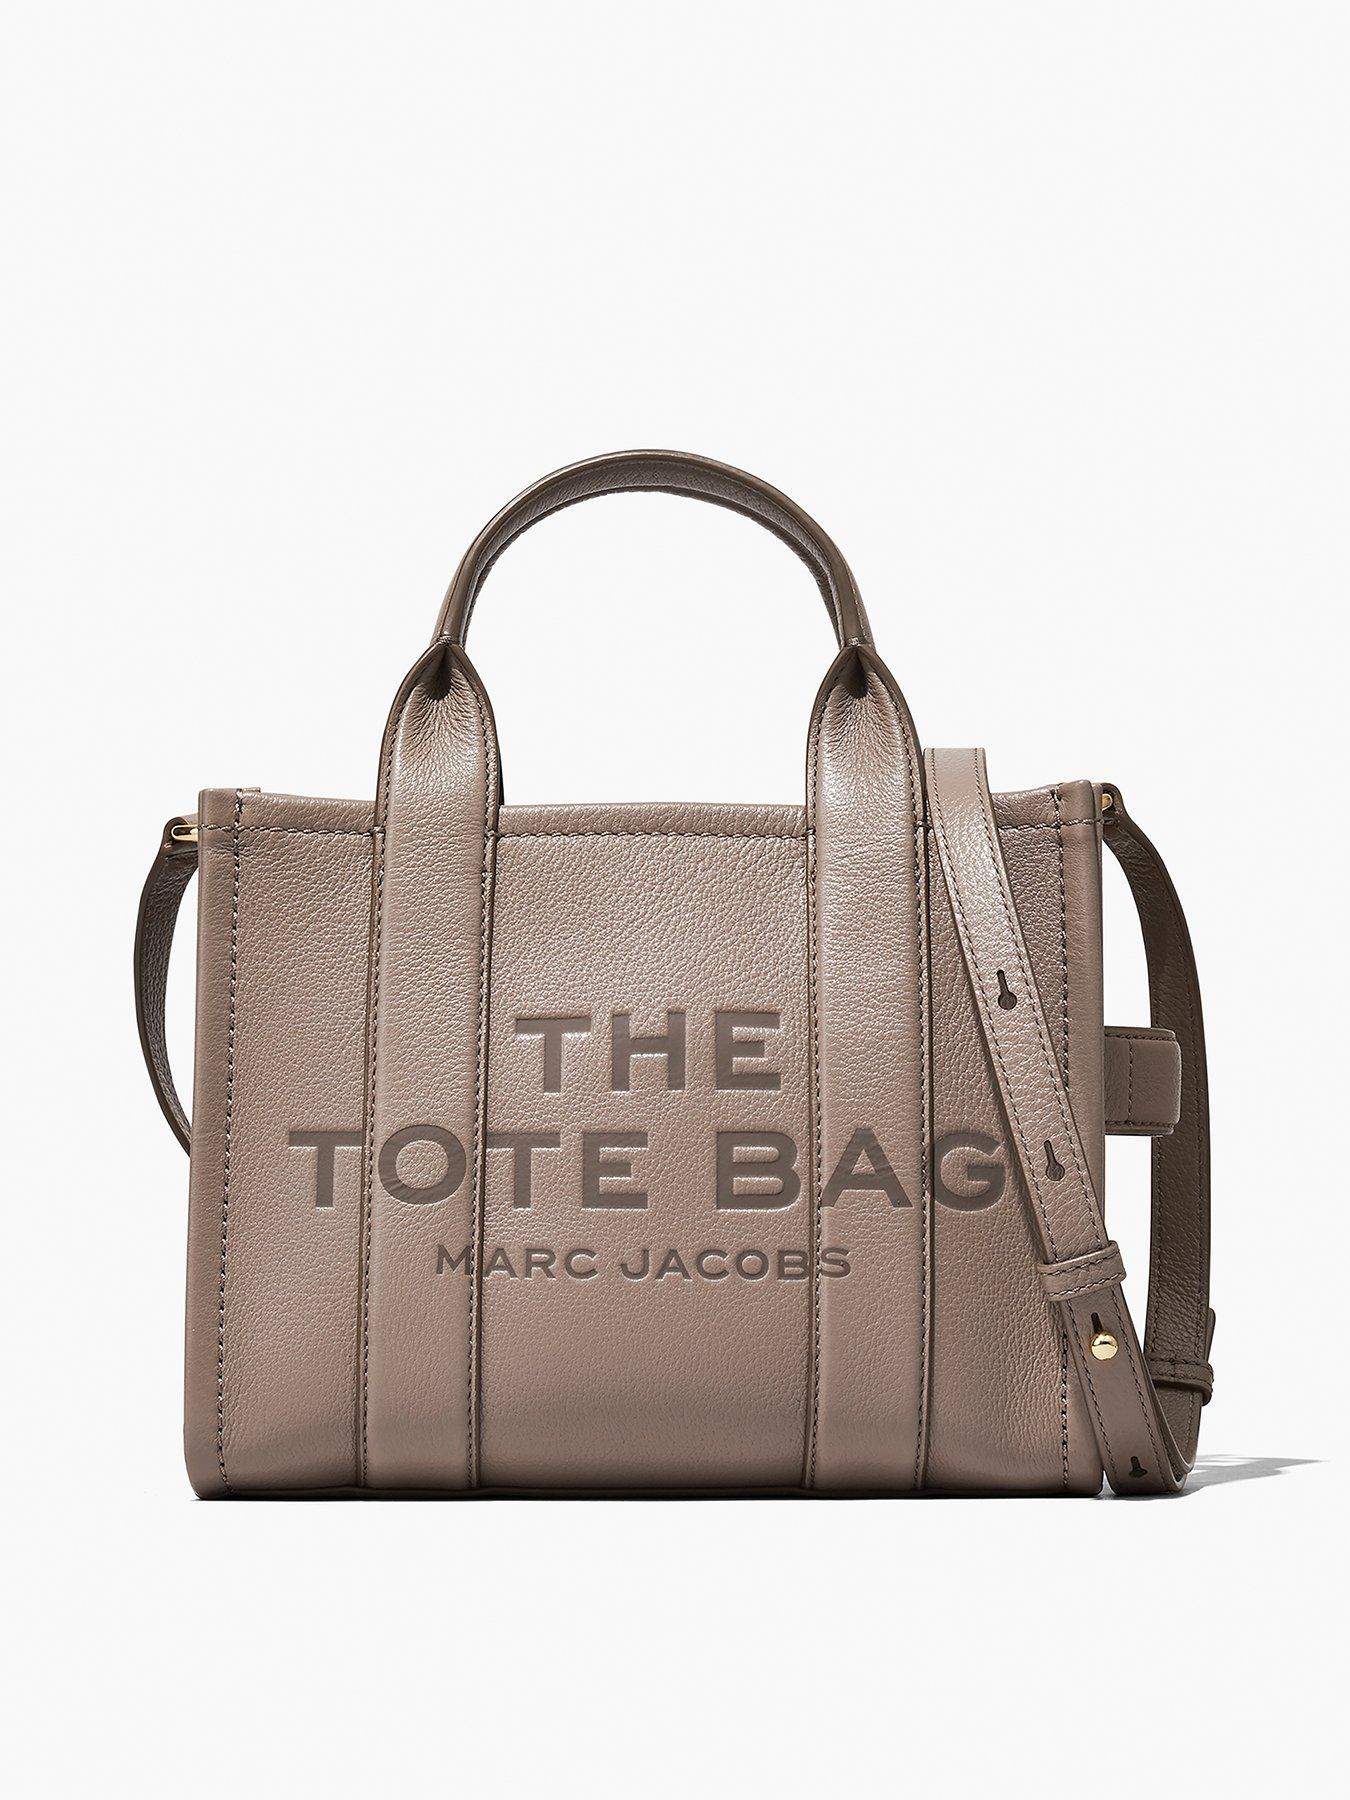 Marc Jacobs Snapshot Bag Dupe -  UK